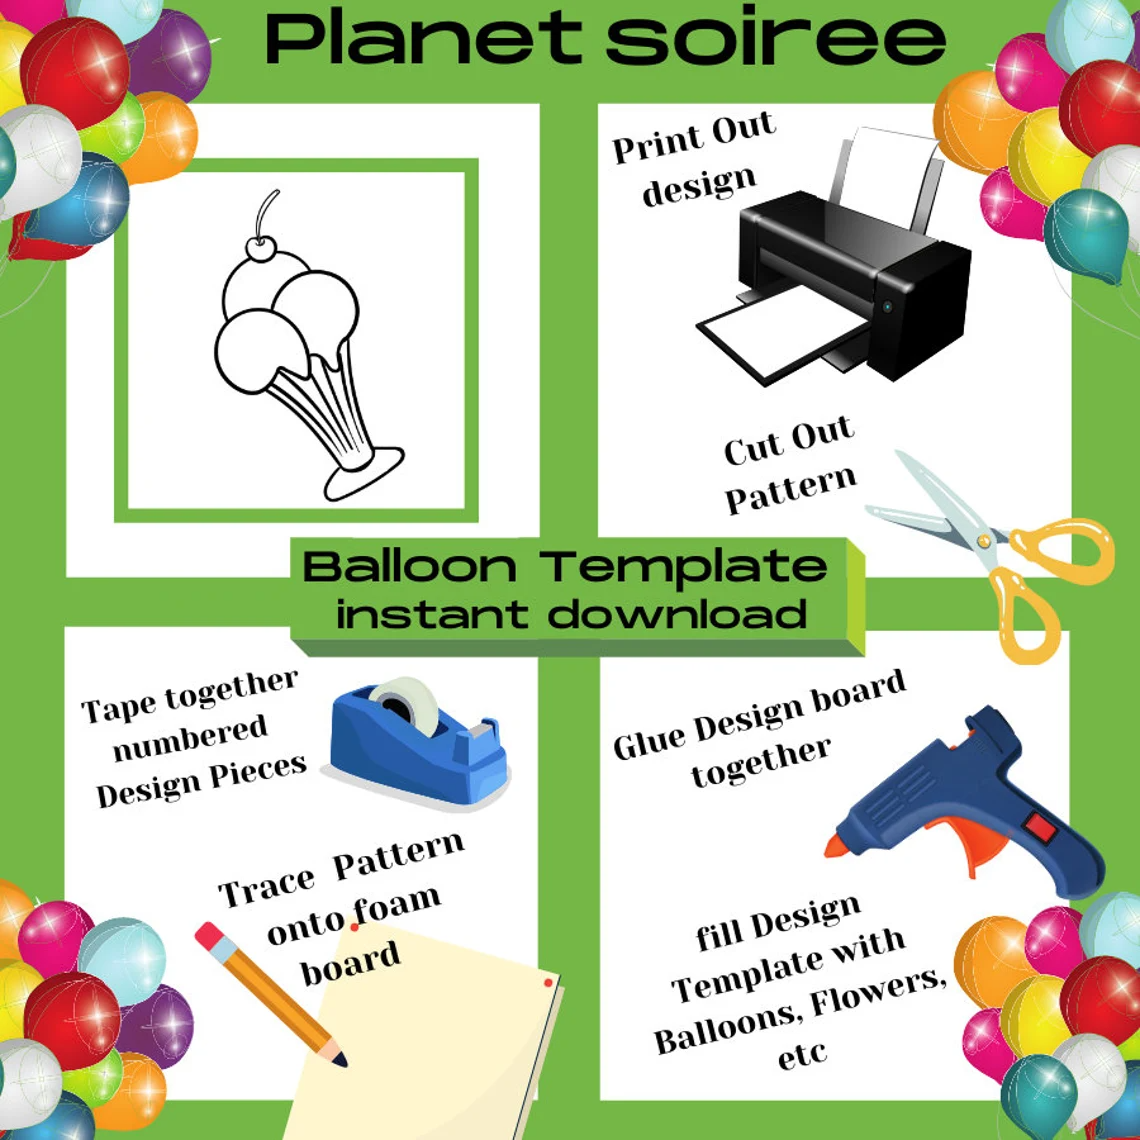 Ice Cream Sundae Balloon Template Digital Downloads-Ice Cream Party Balloon Template-Birthday and Party Decoration Balloon templates.